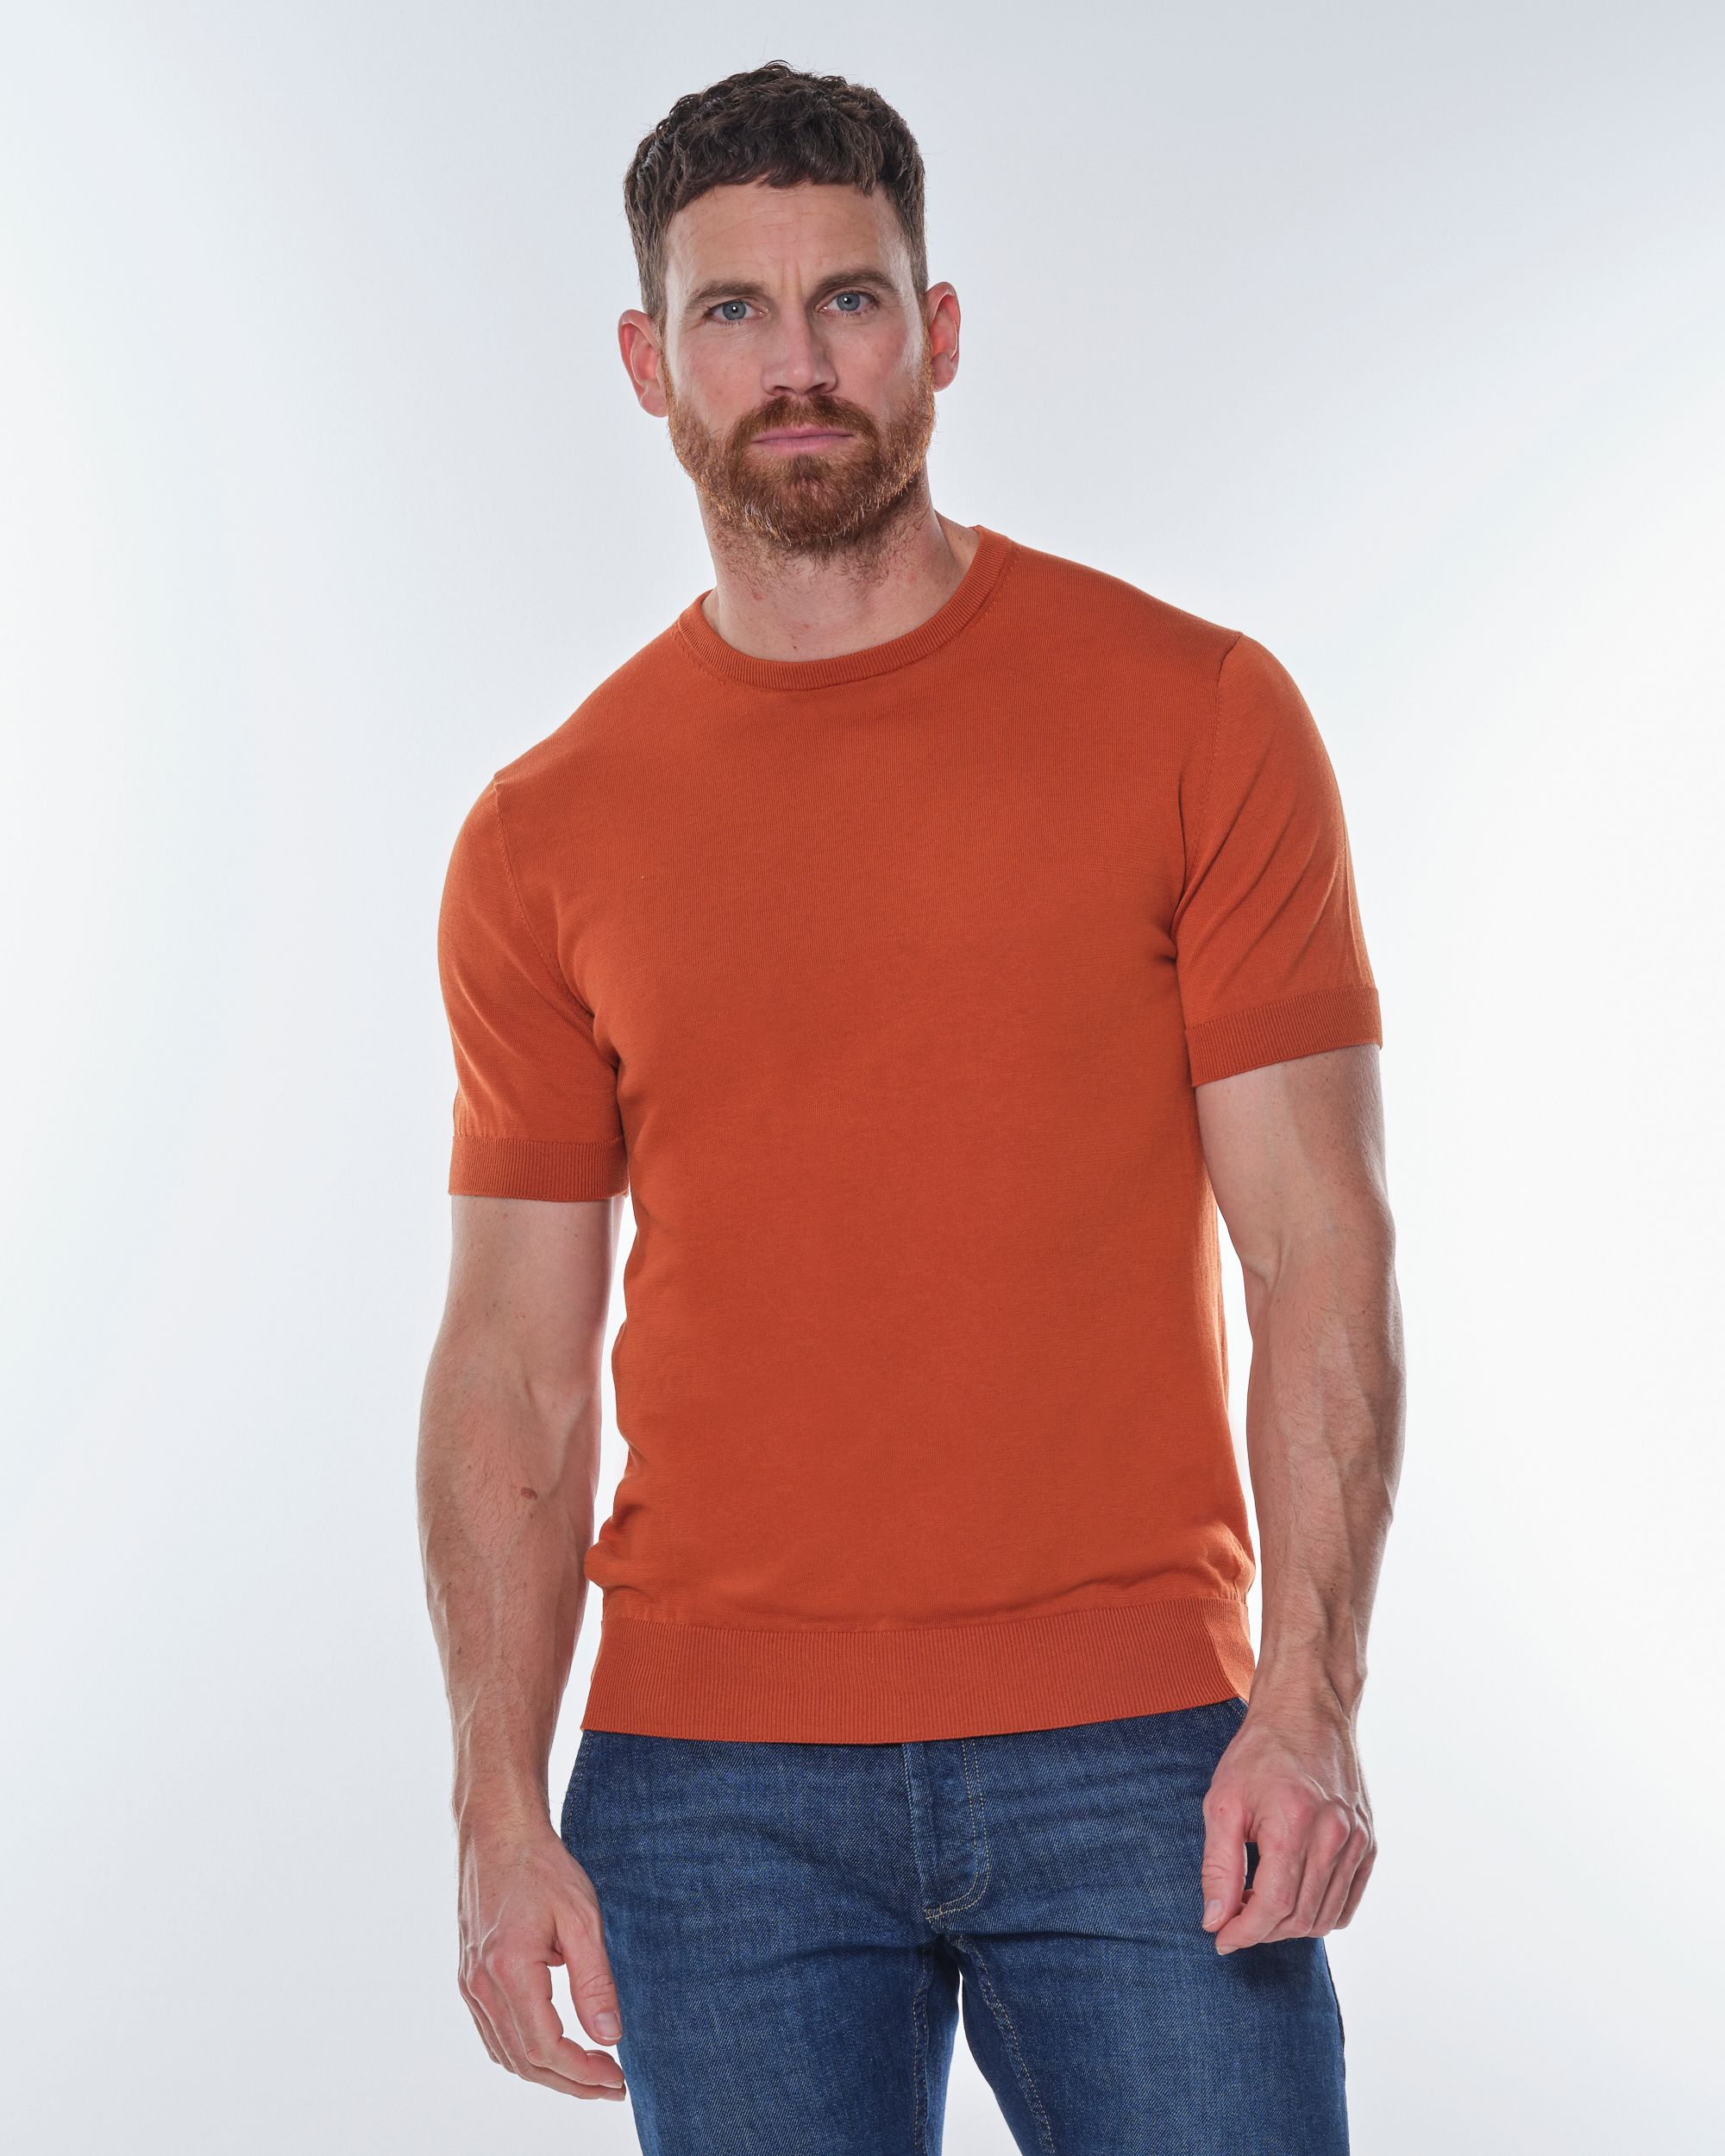 Dutch Dandies Dean T-shirt KM Oranje uni 073176-003-L